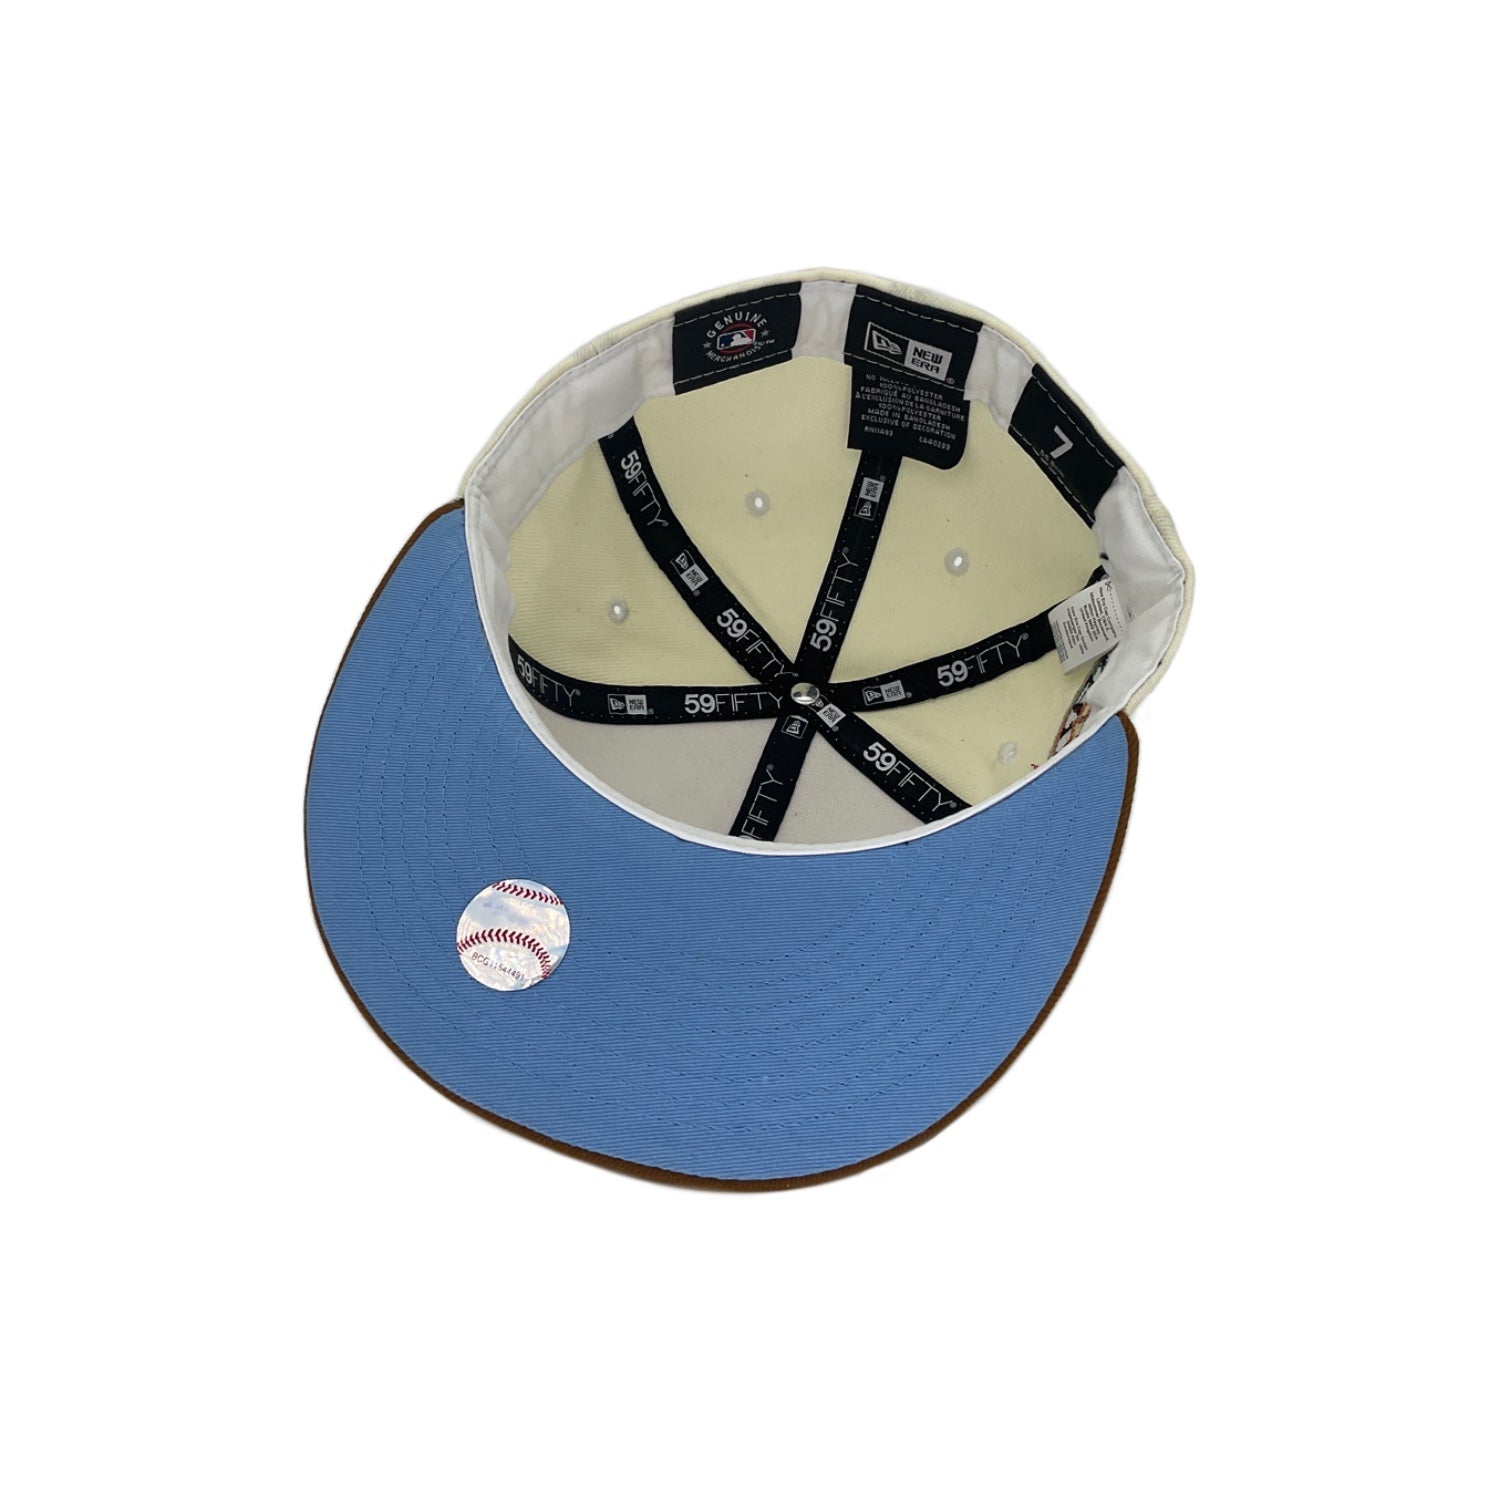 New Era, Accessories, New Era 59fifty Houston Astros Hat Size 7 558cm